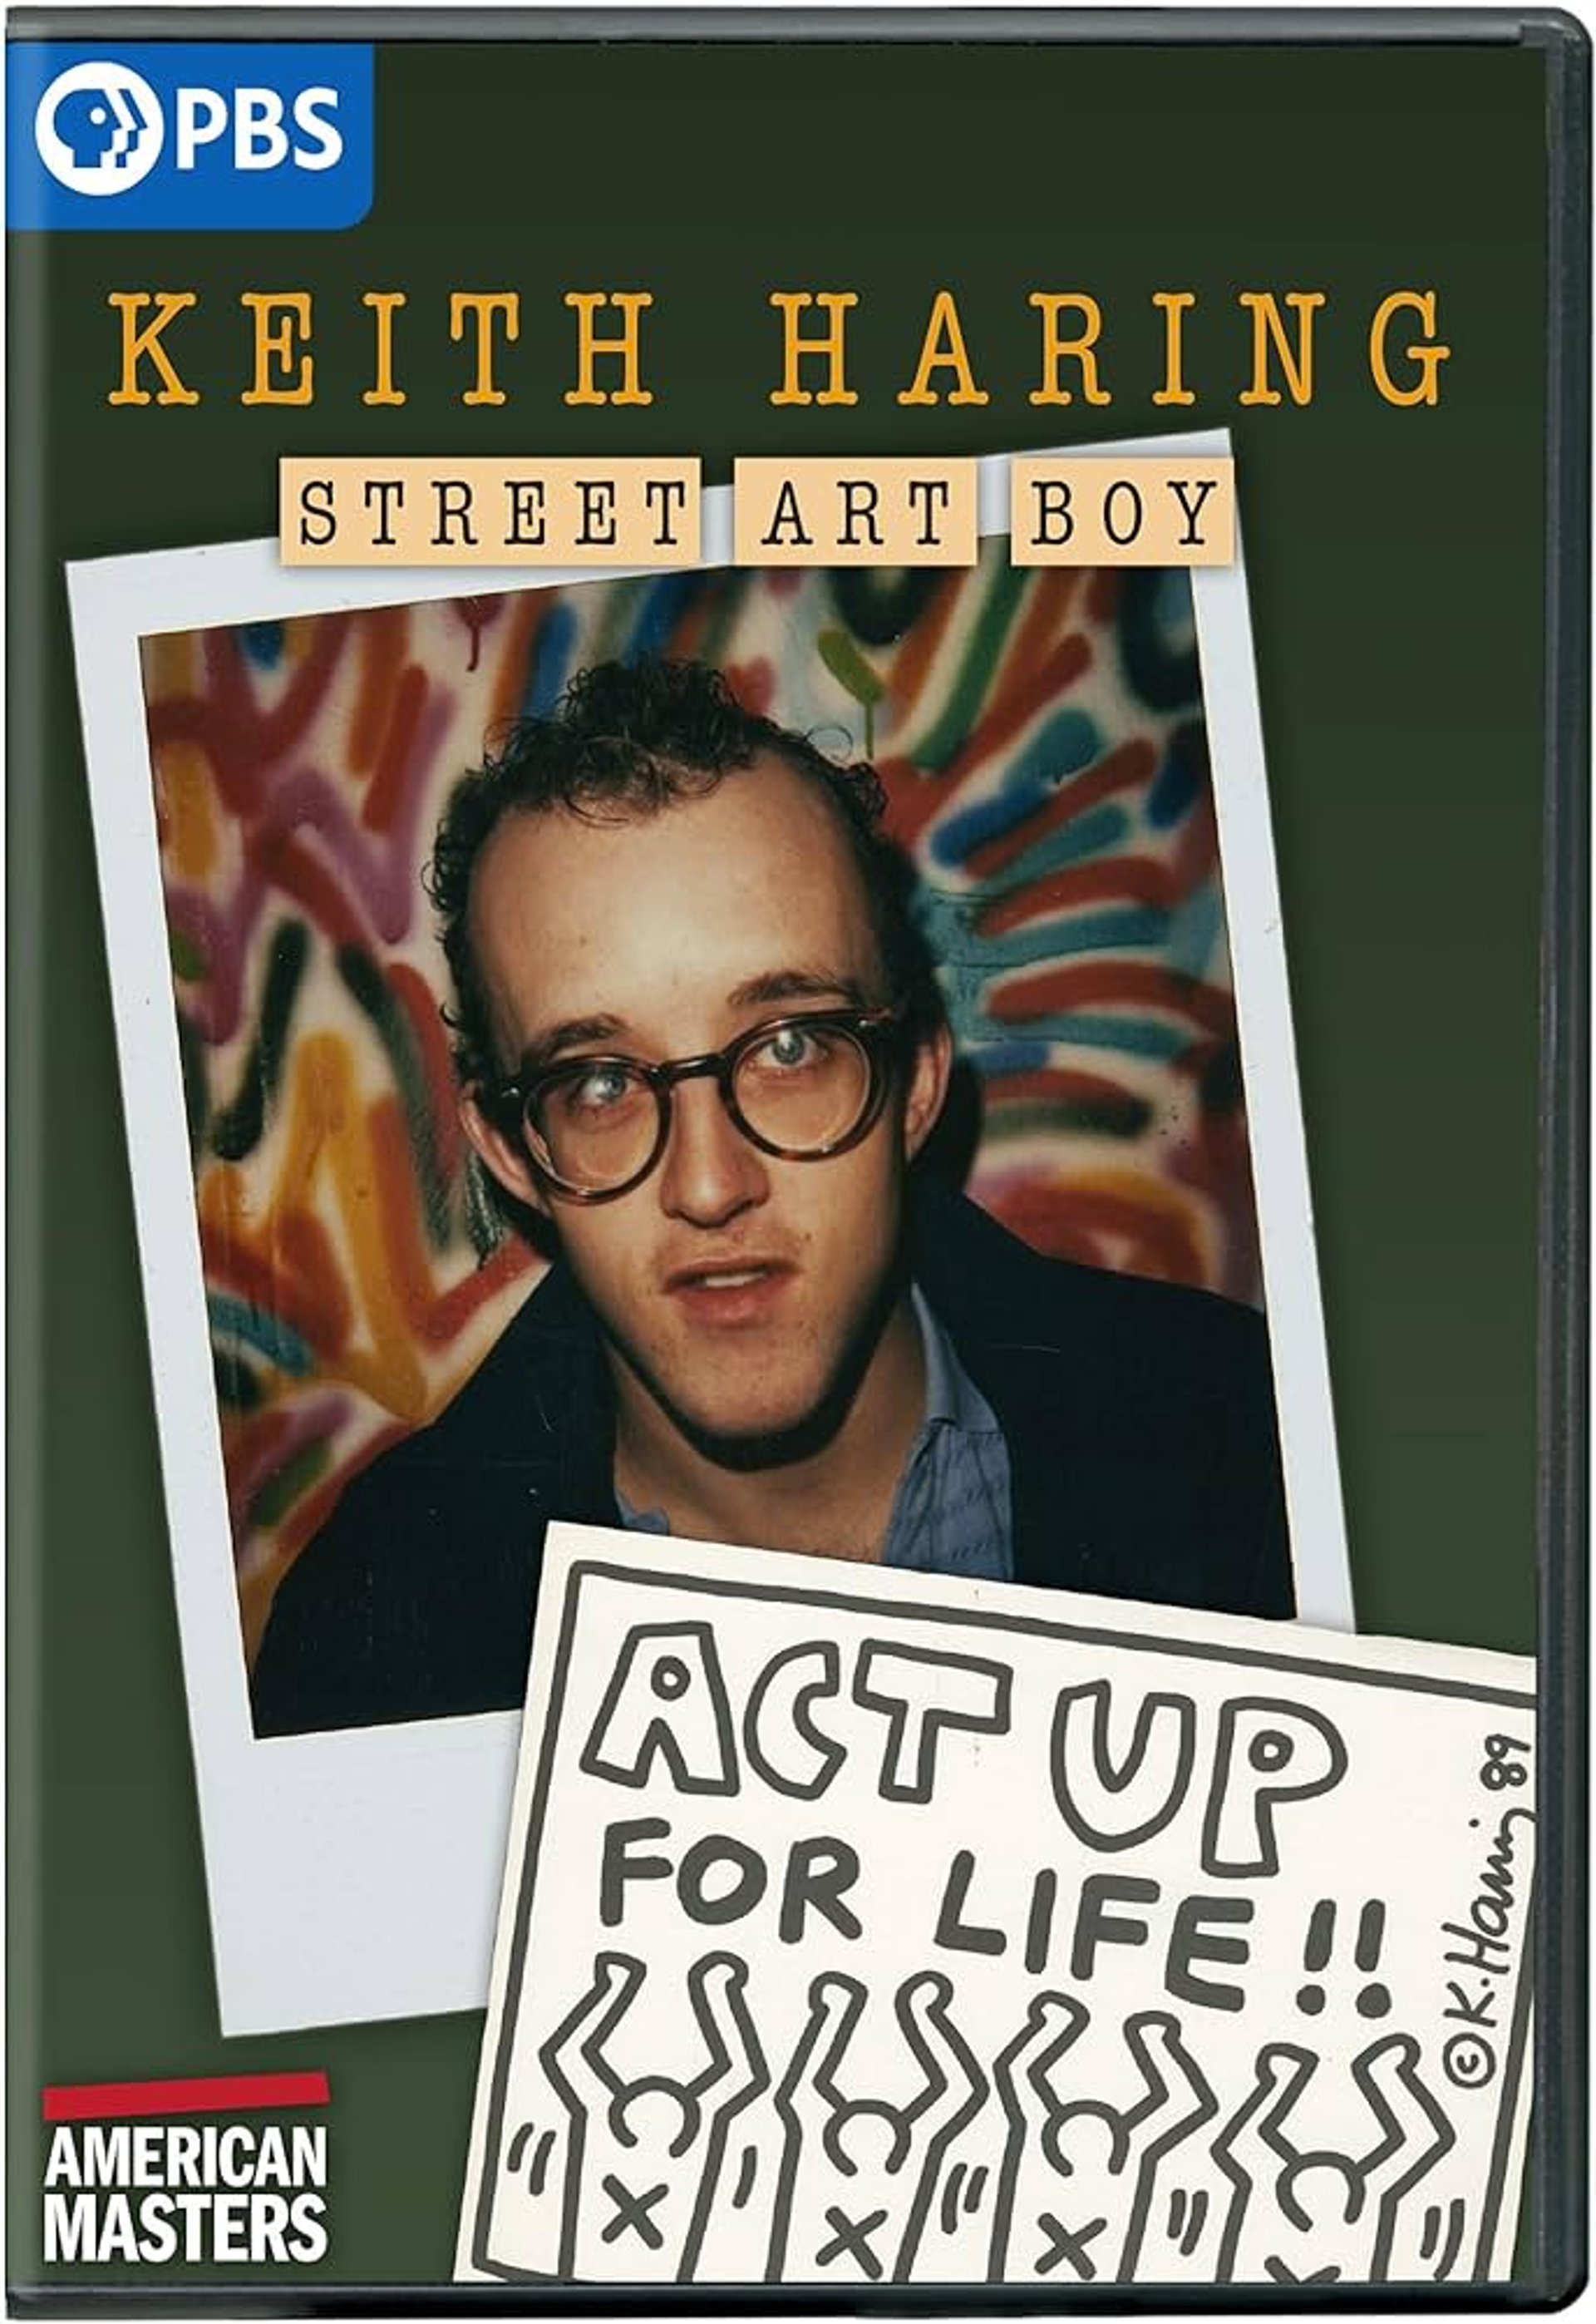 MyArtBroker Film Reviews: Keith Haring - Street Art Boy (2020)